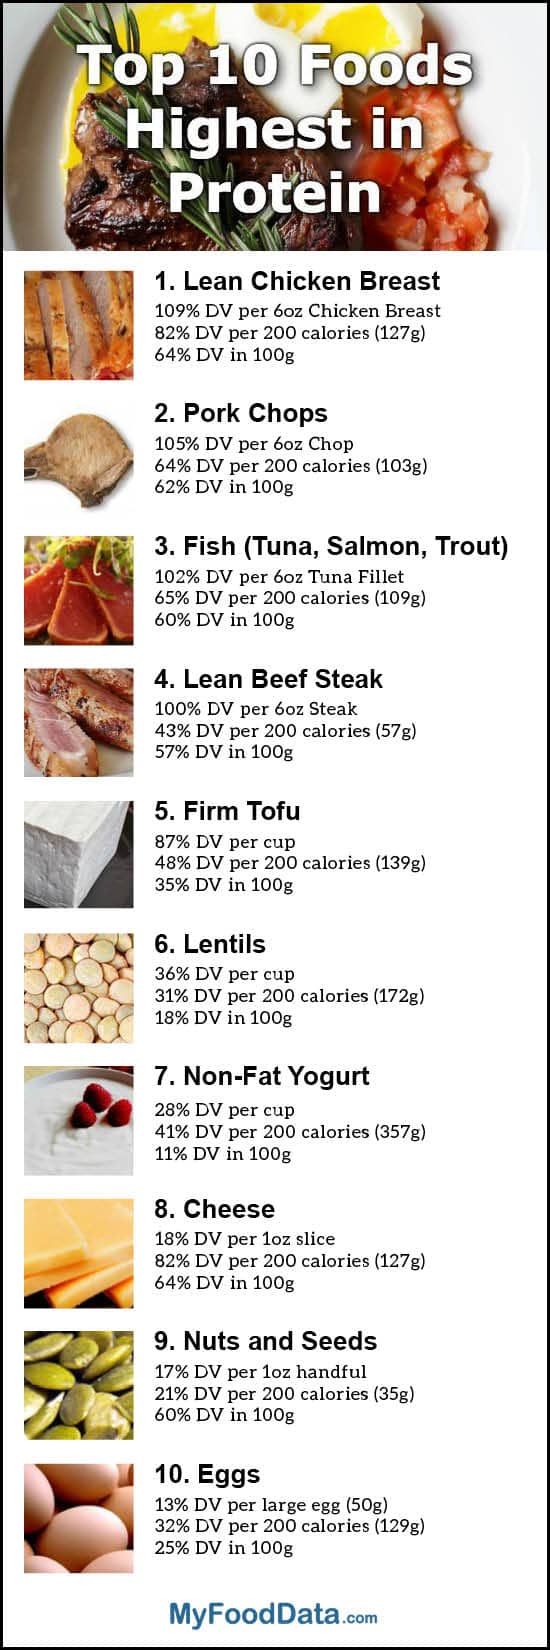 Printable High Protein Food List